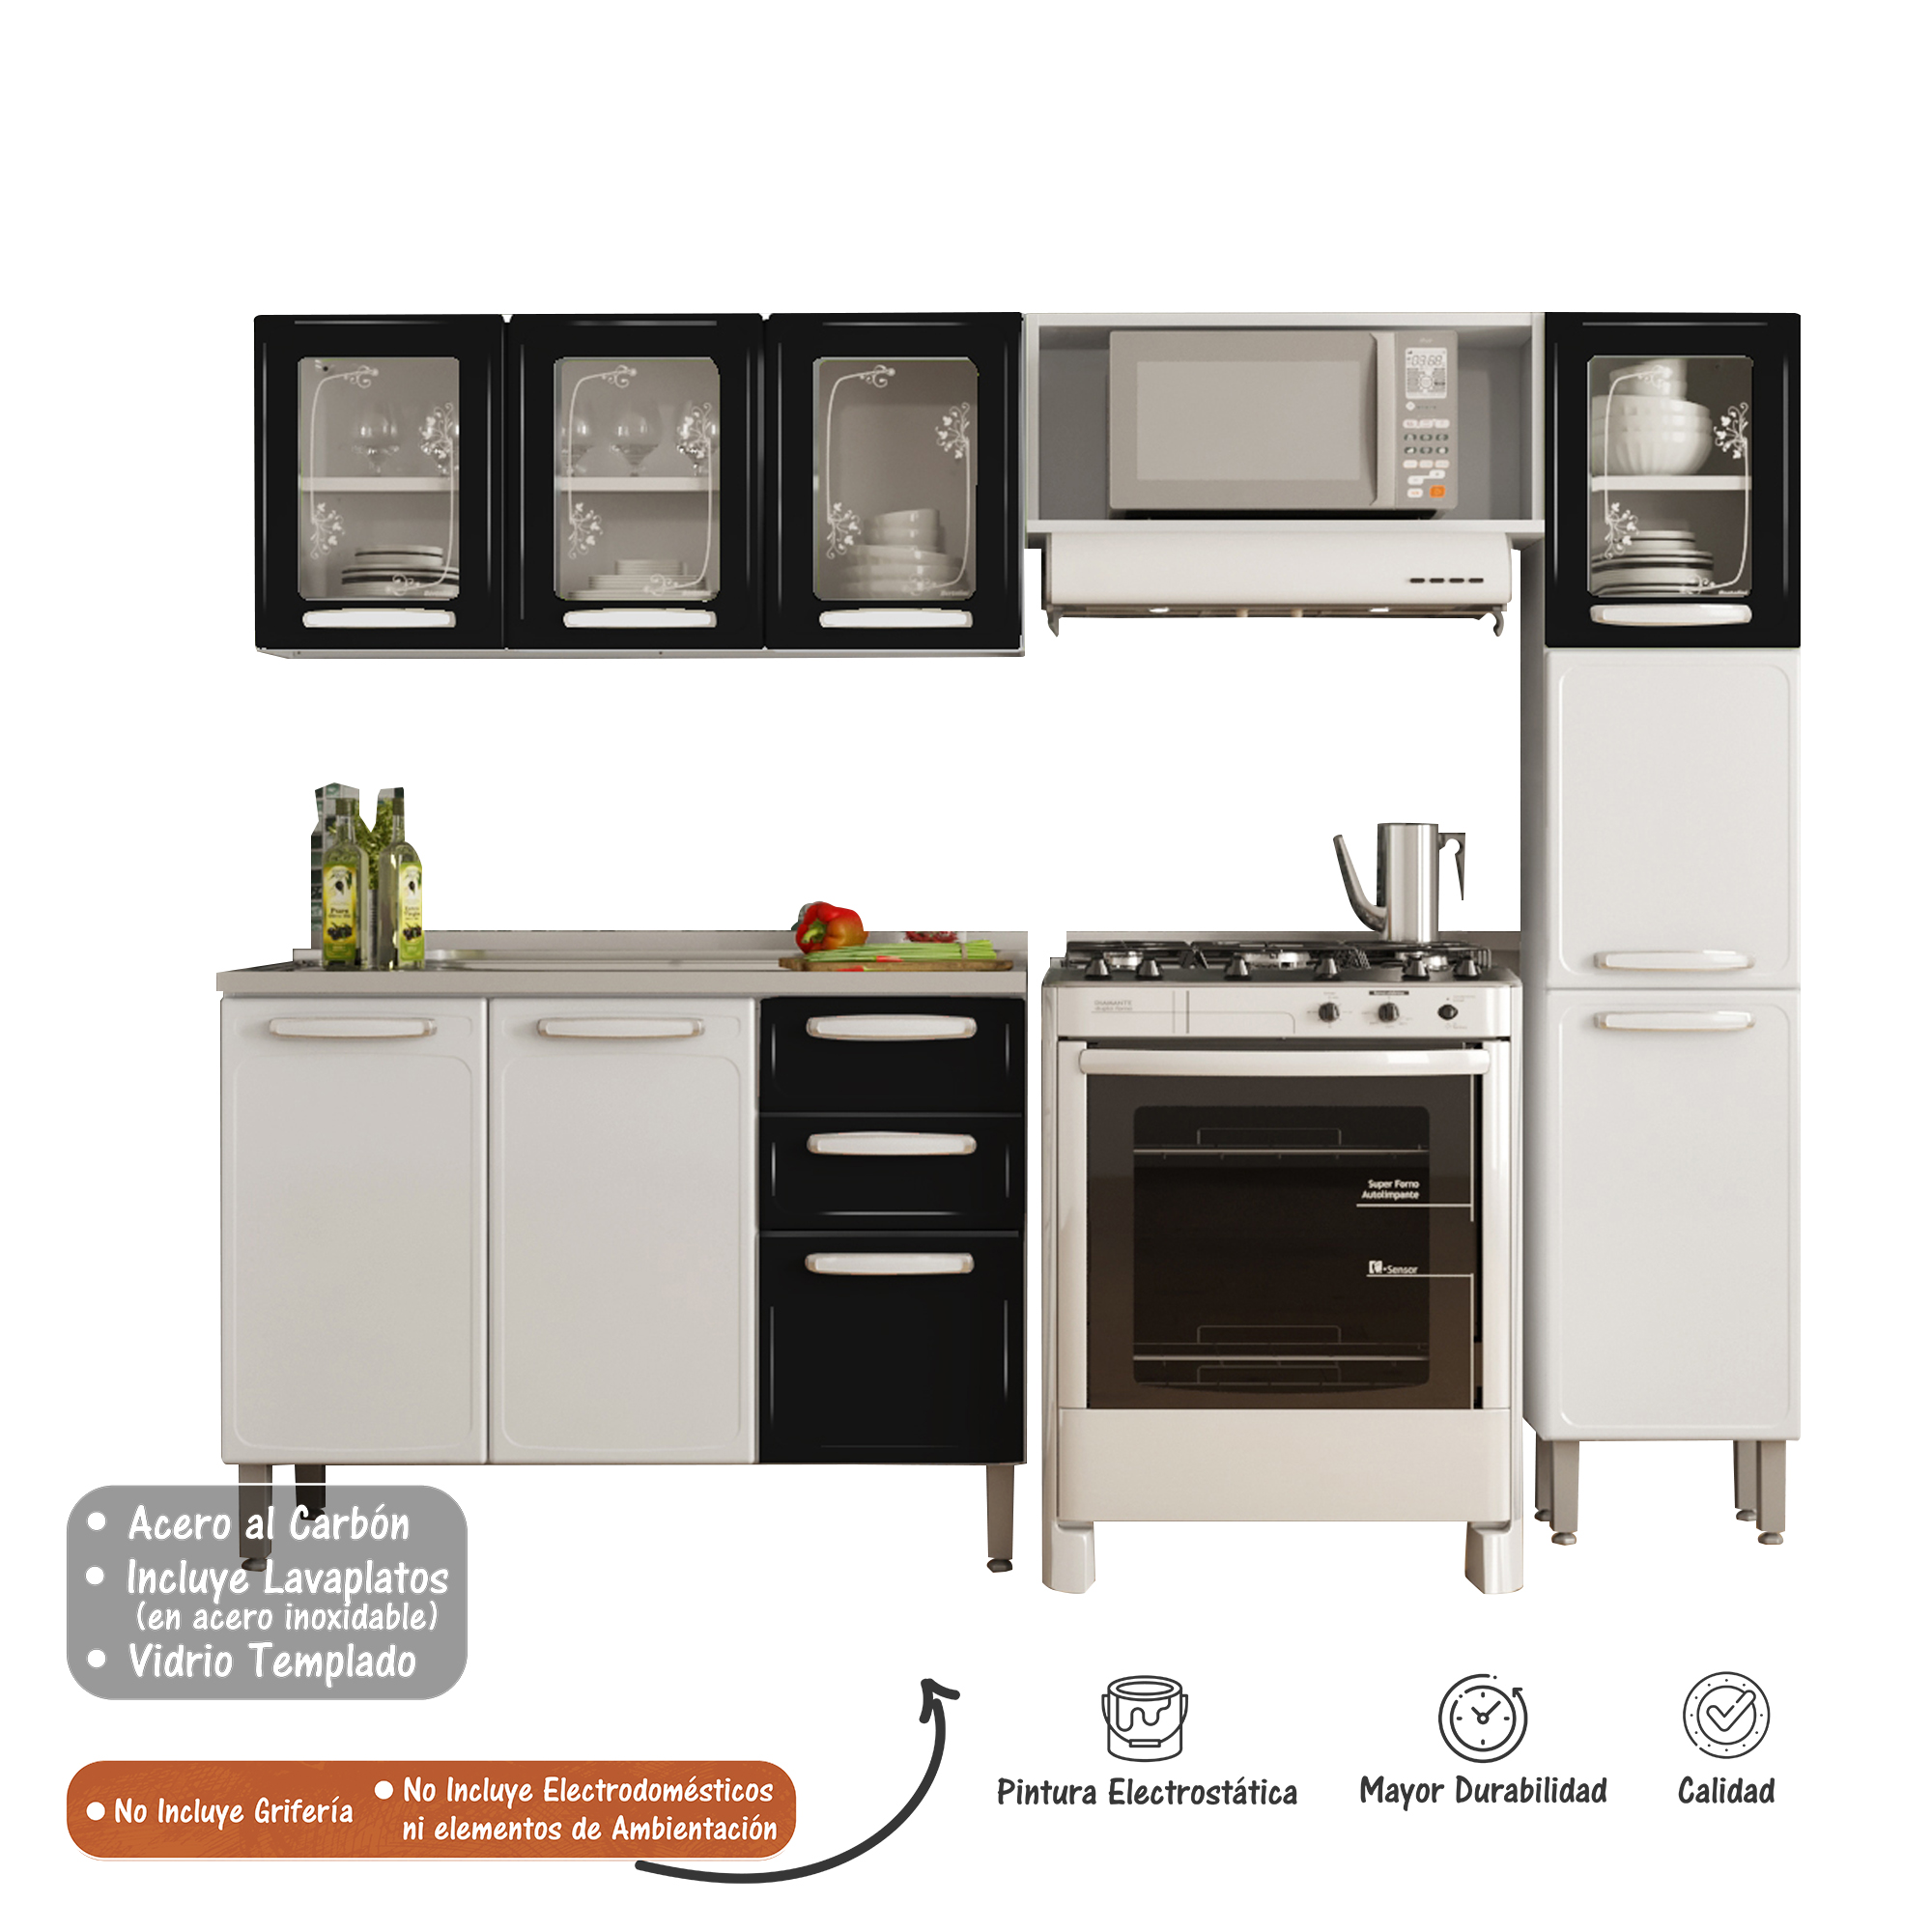 Cocina Integral Bertolini En Acero 2.20m Incluye Lavaplatos Color Negro